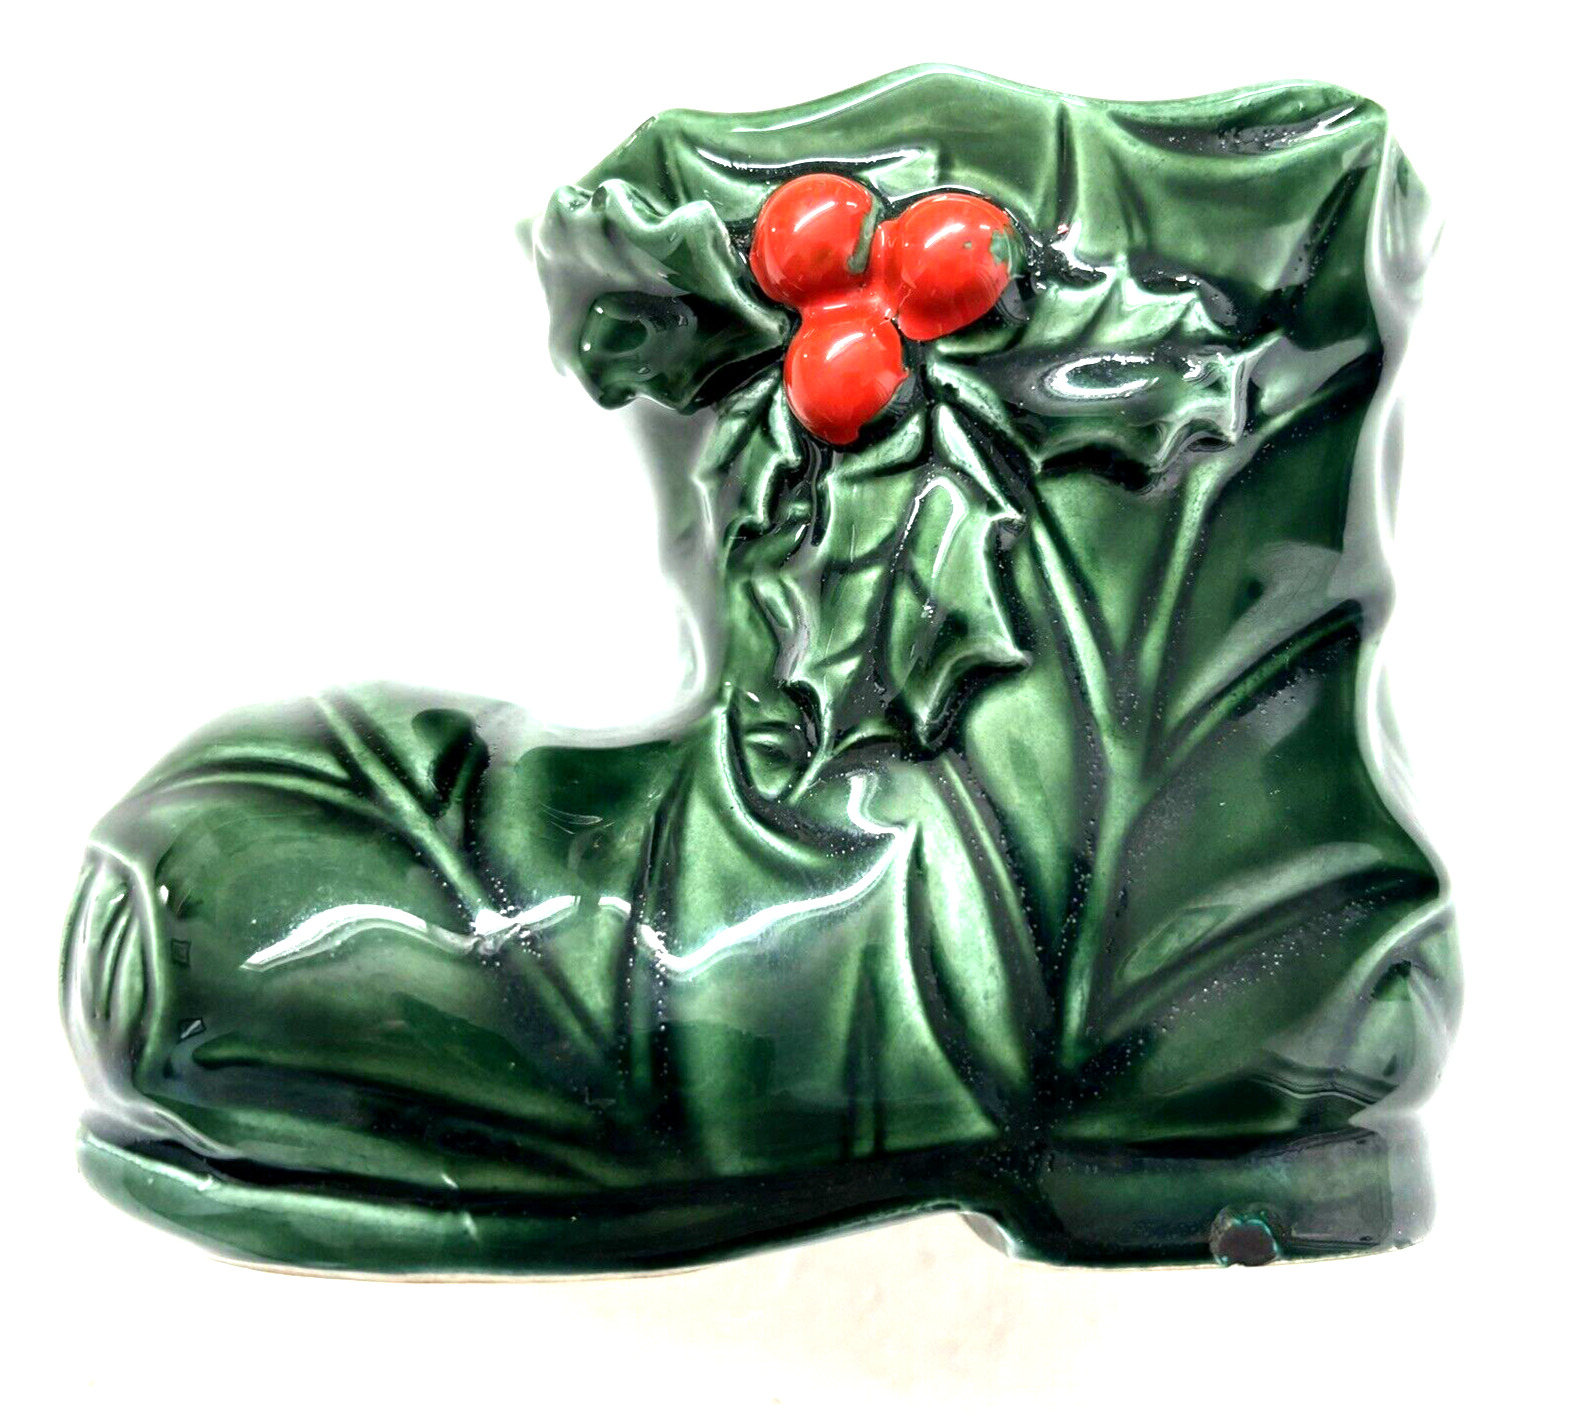 VTG LEFTON Christmas Holly Boot Planter or Candy Jar Holder Green Red Japan 1970